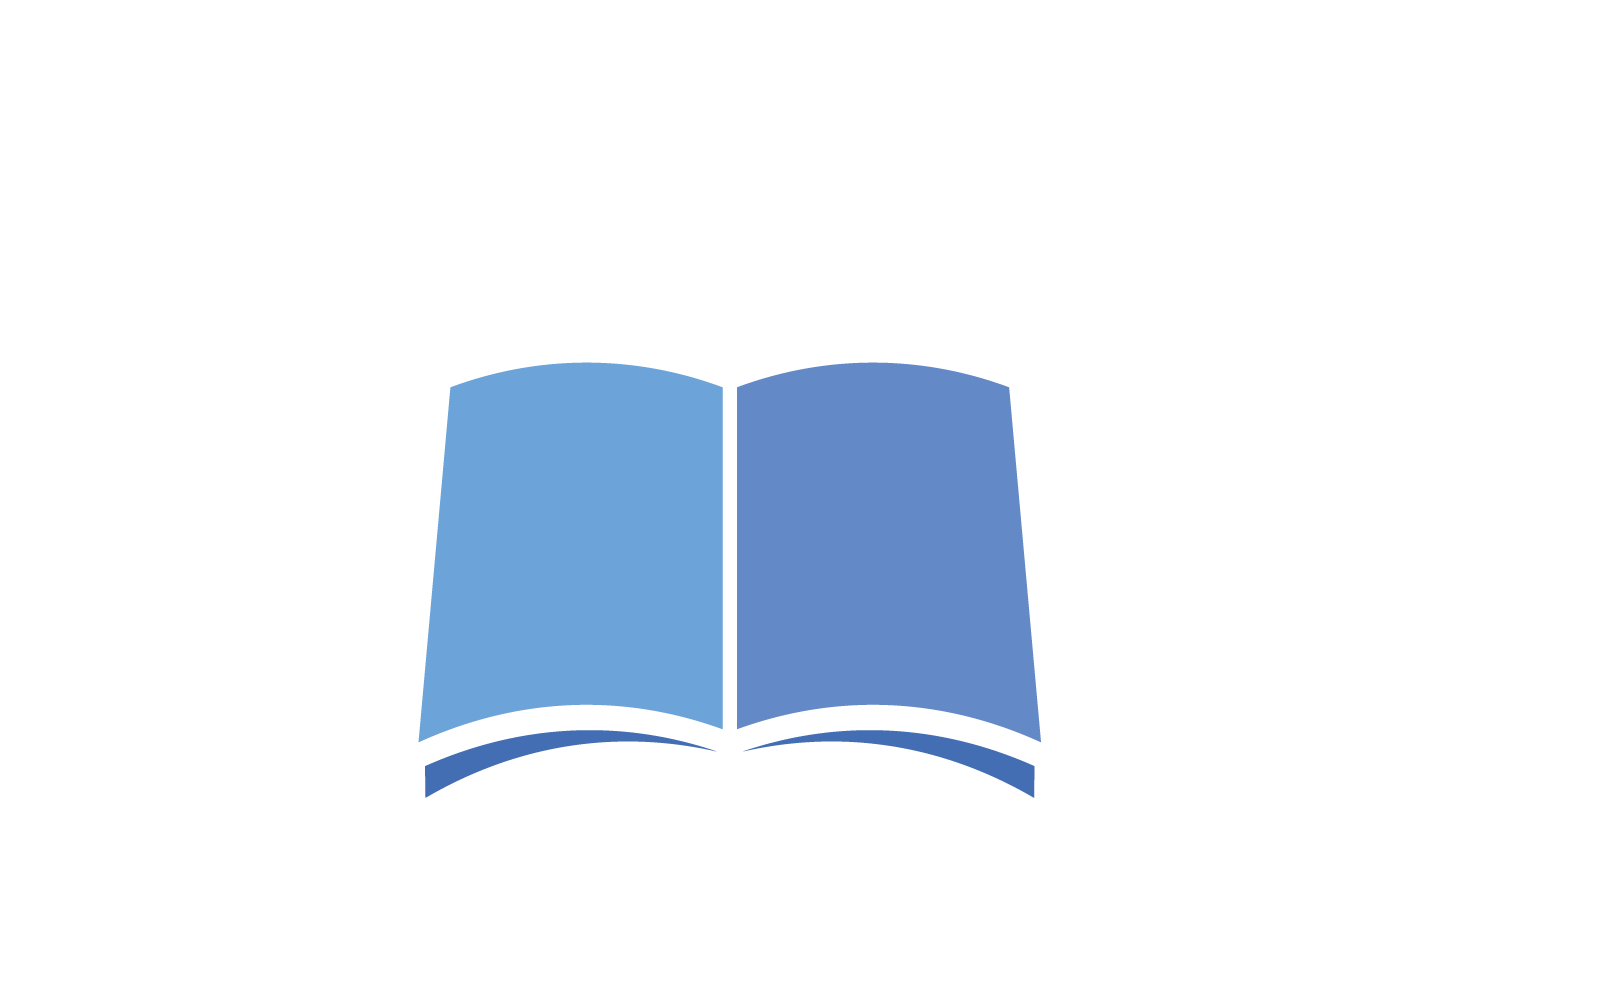 Book education illustration logo template vector design